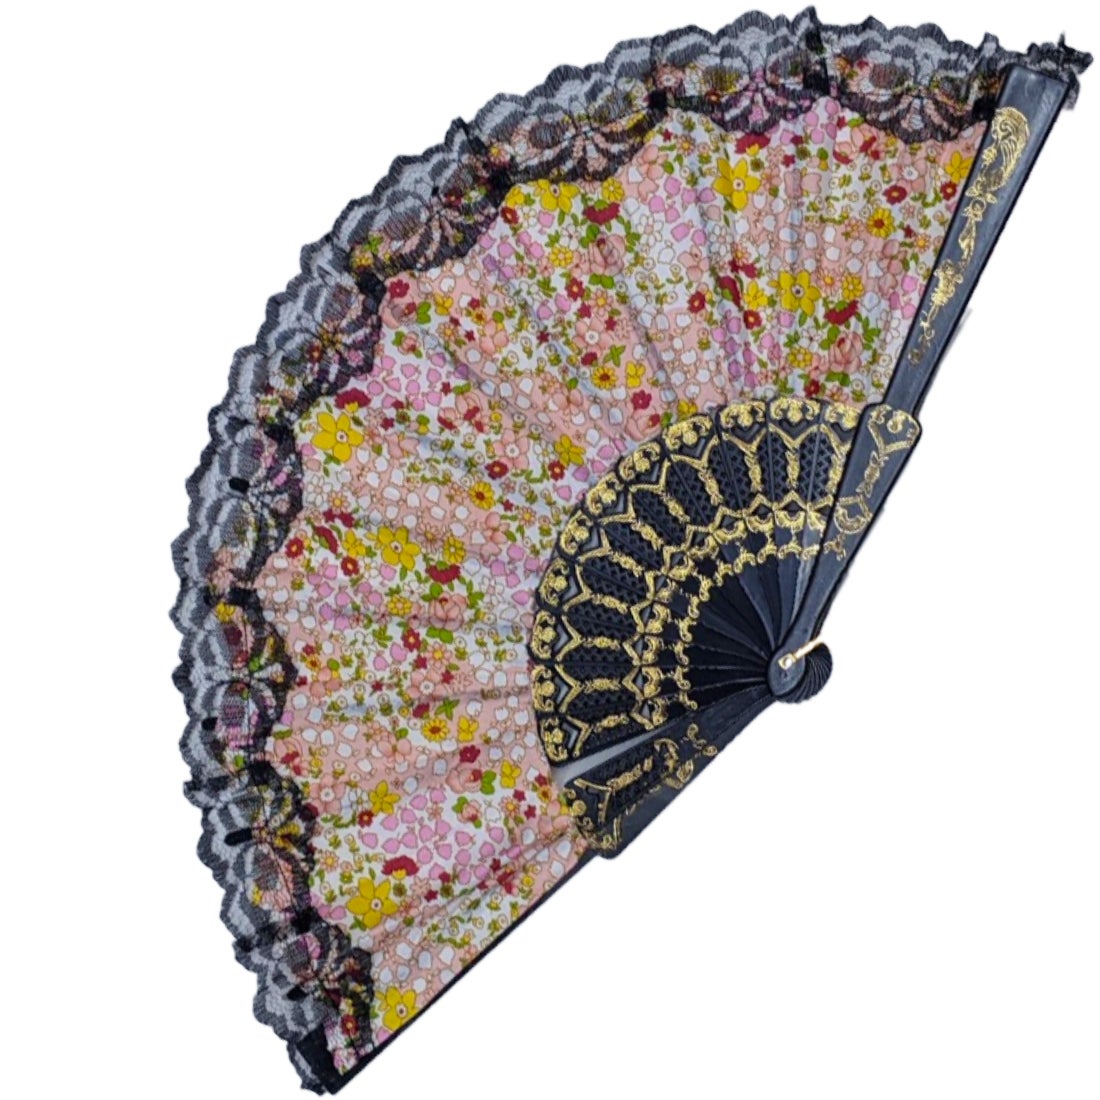 Spanish Floral Folding Hand Fan Flowers Pattern Lace Handheld Fans Size 10 Pack 